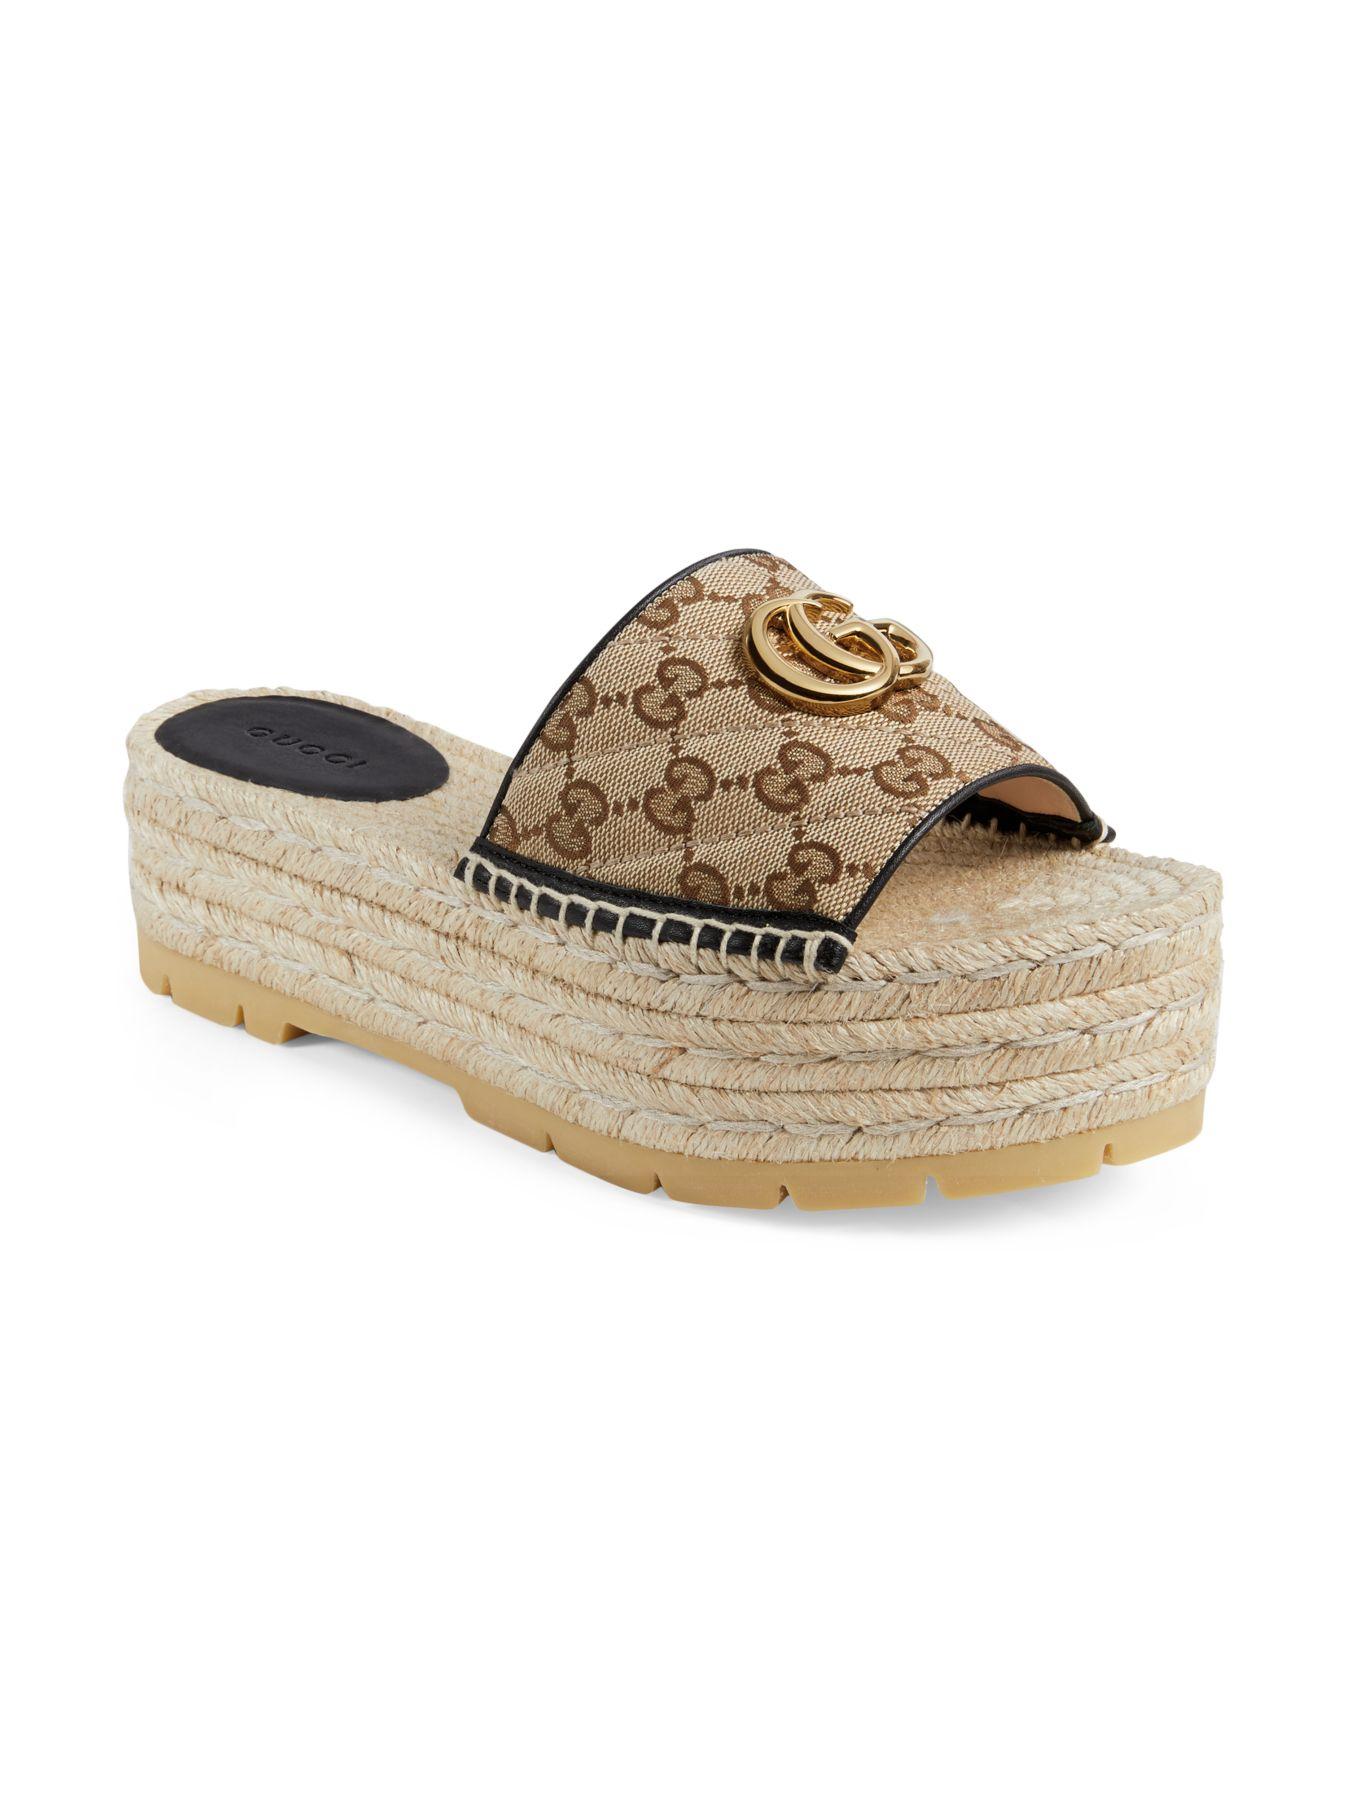 Gucci GG Matelassé Canvas Espadrille Sandals in Beige (Natural) - Lyst